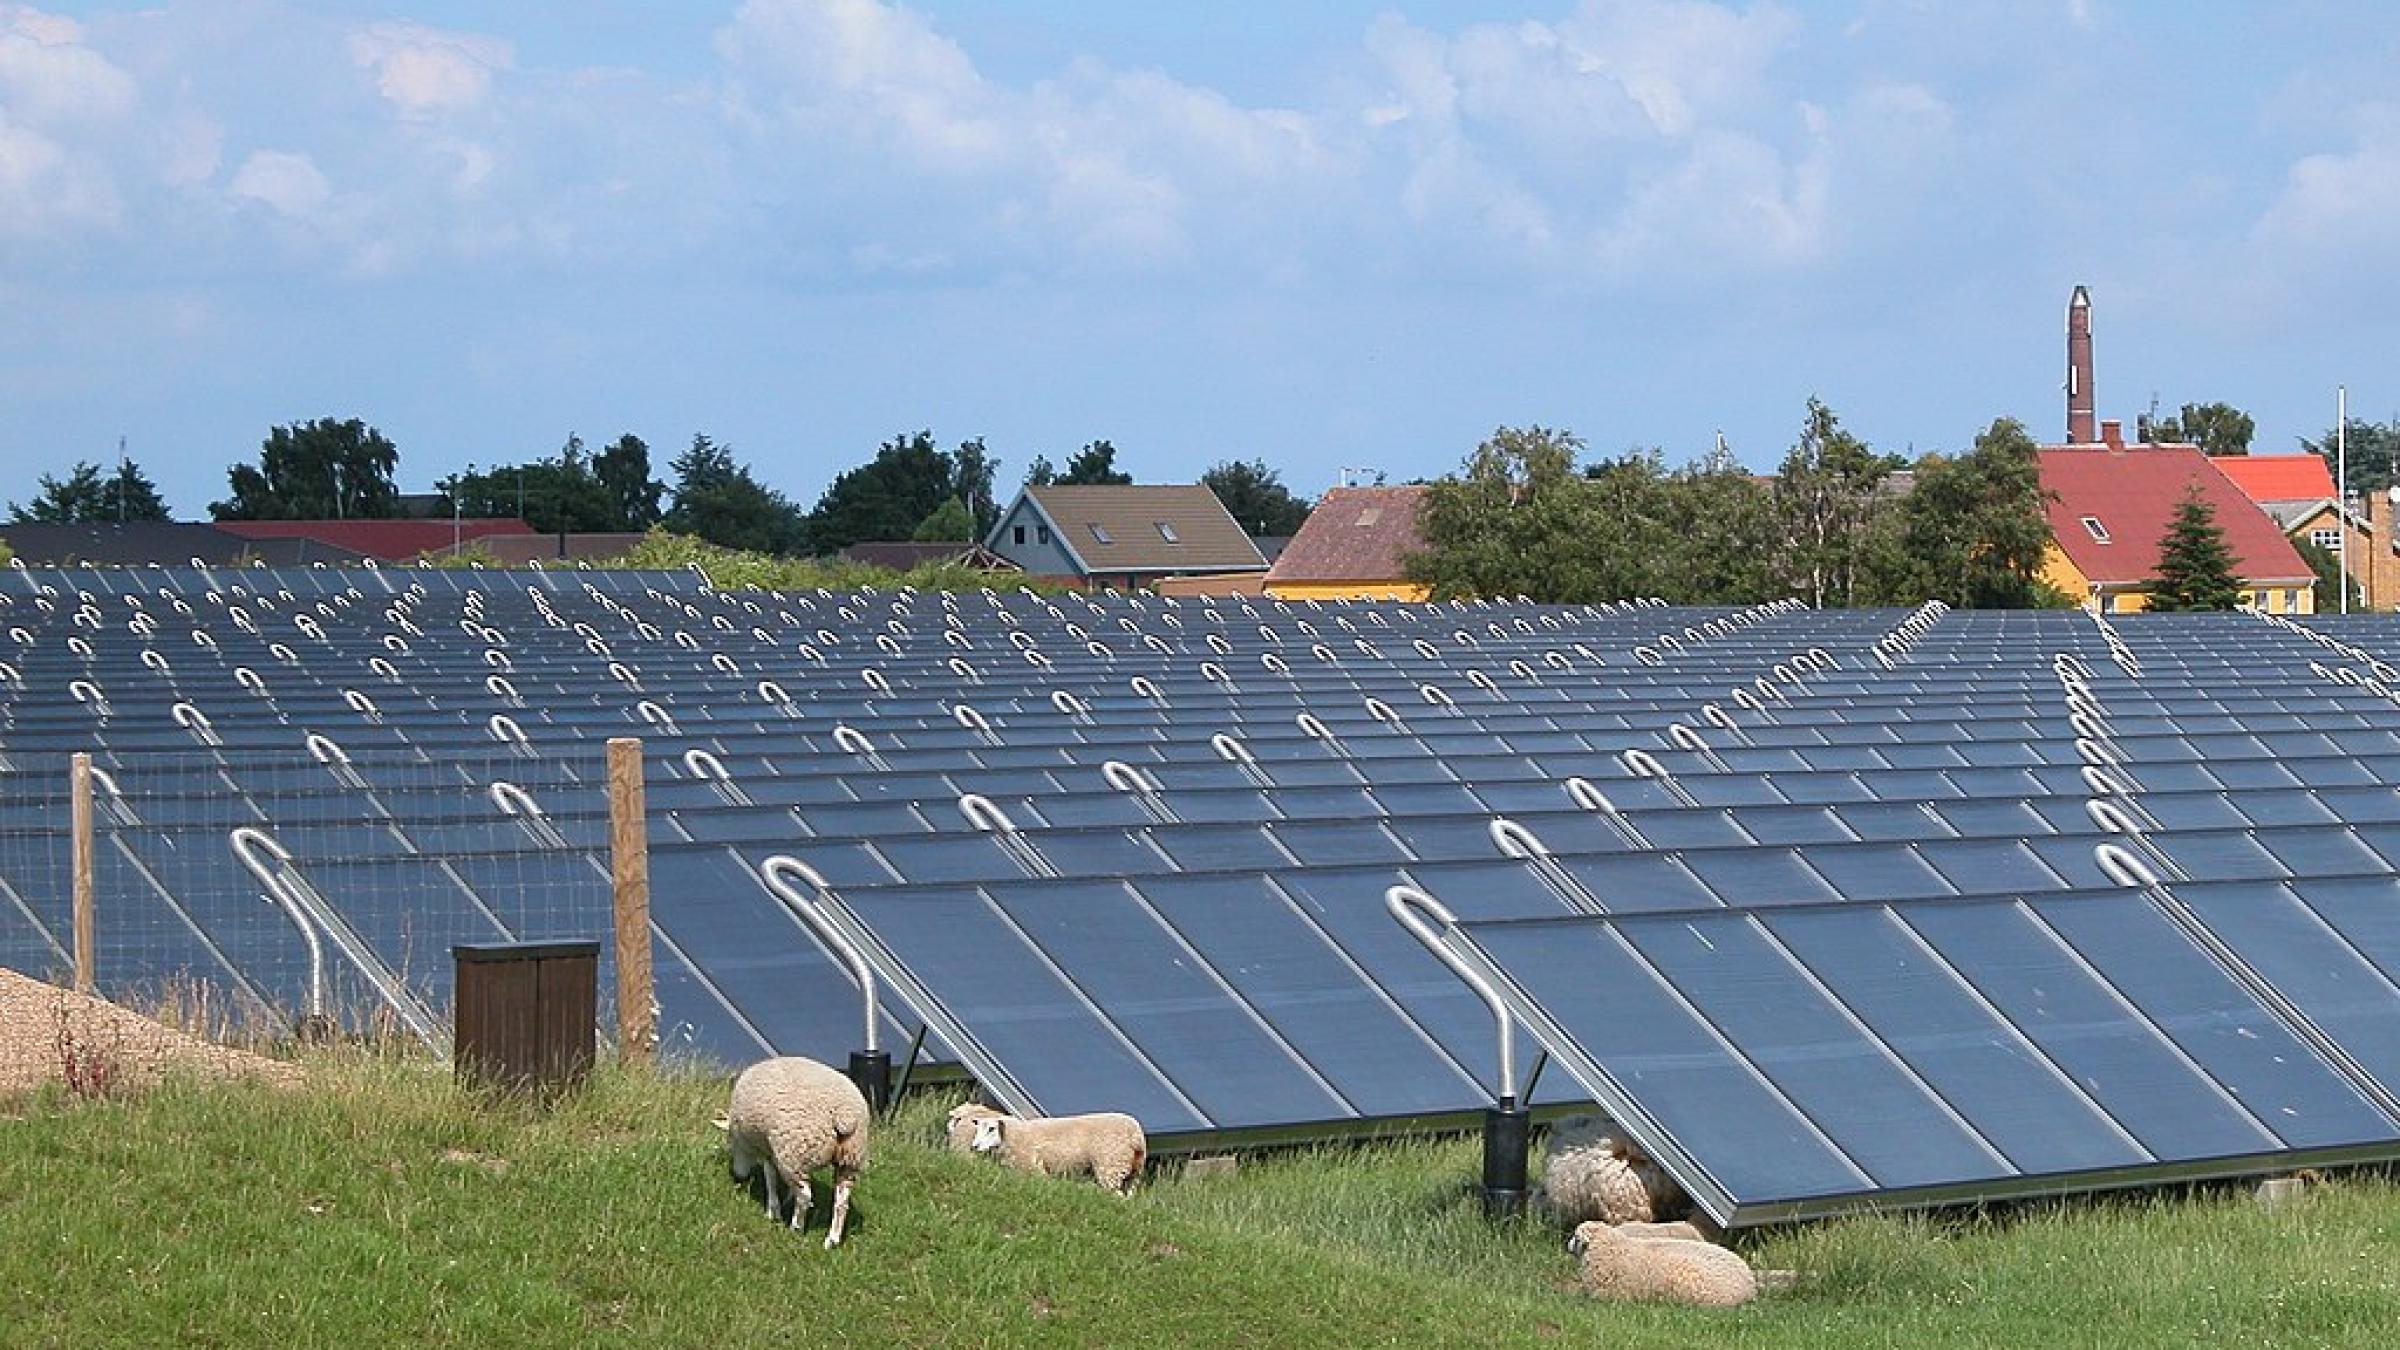 Centrale solaire de Marstal au Danemark - Erik Christensen - Creative Commons Attribution